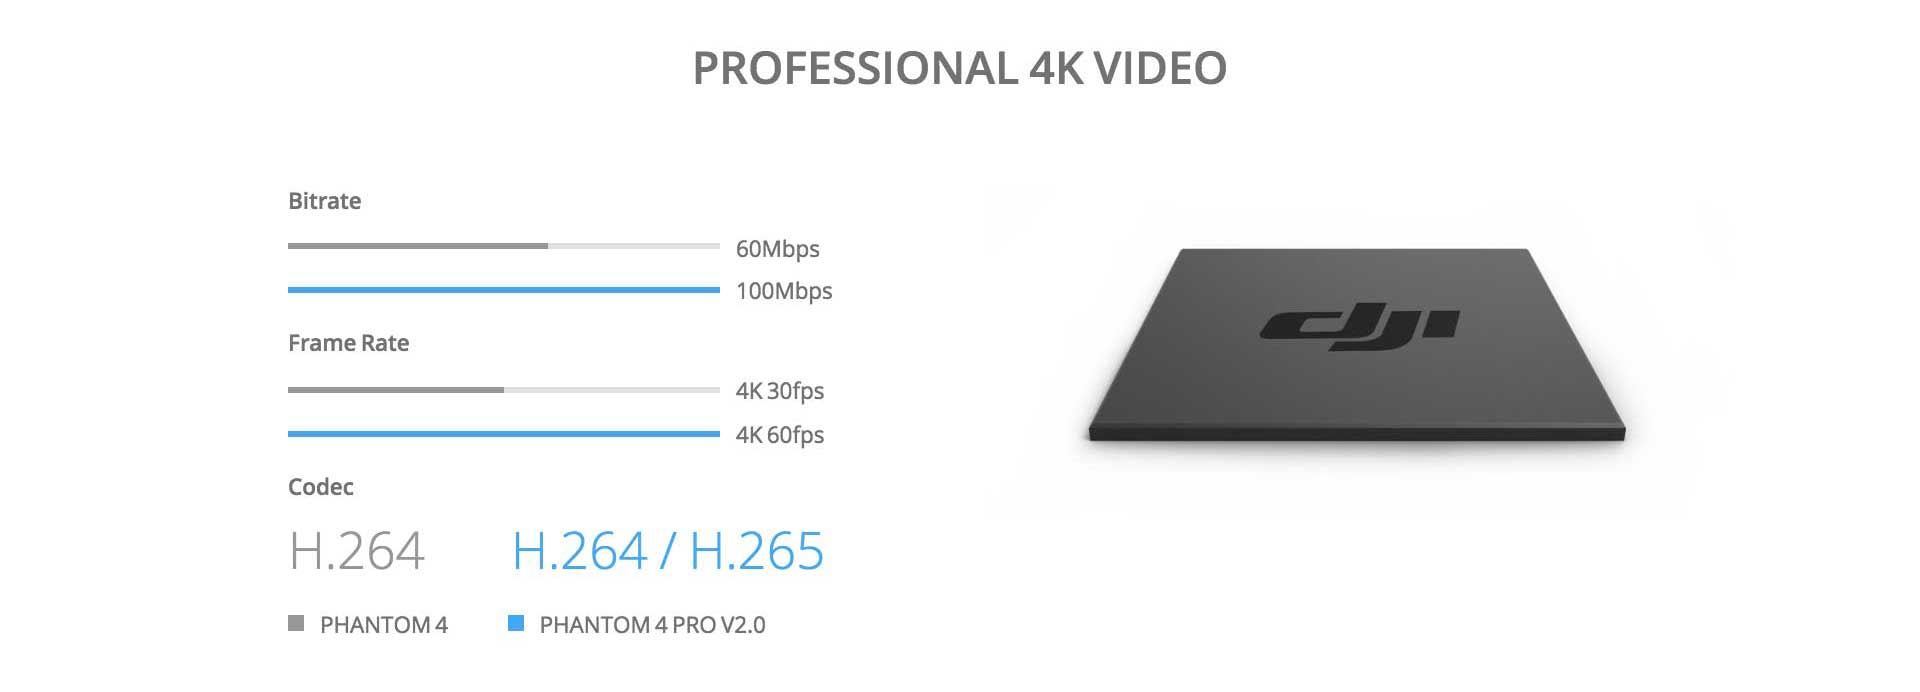 DJI Phantom 4 Pro V2.0 PROFESSIONAL 4K VIDEO